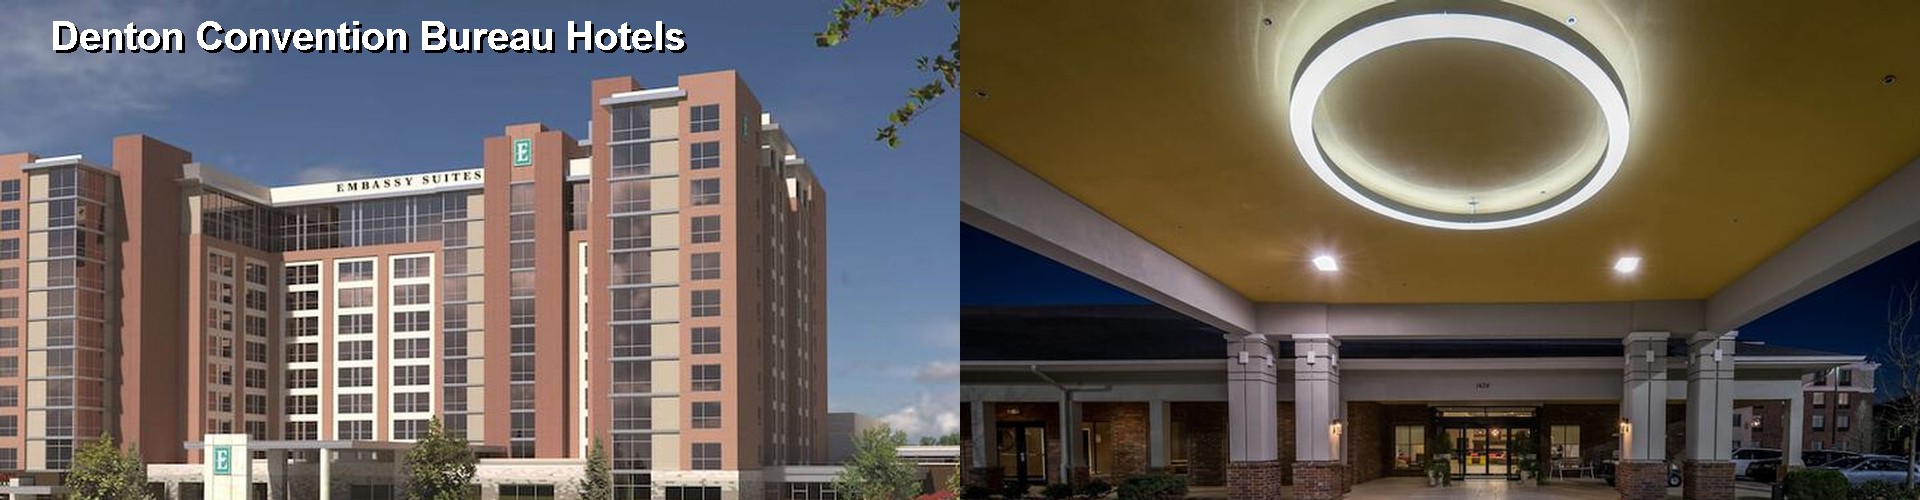 3 Best Hotels near Denton Convention Bureau